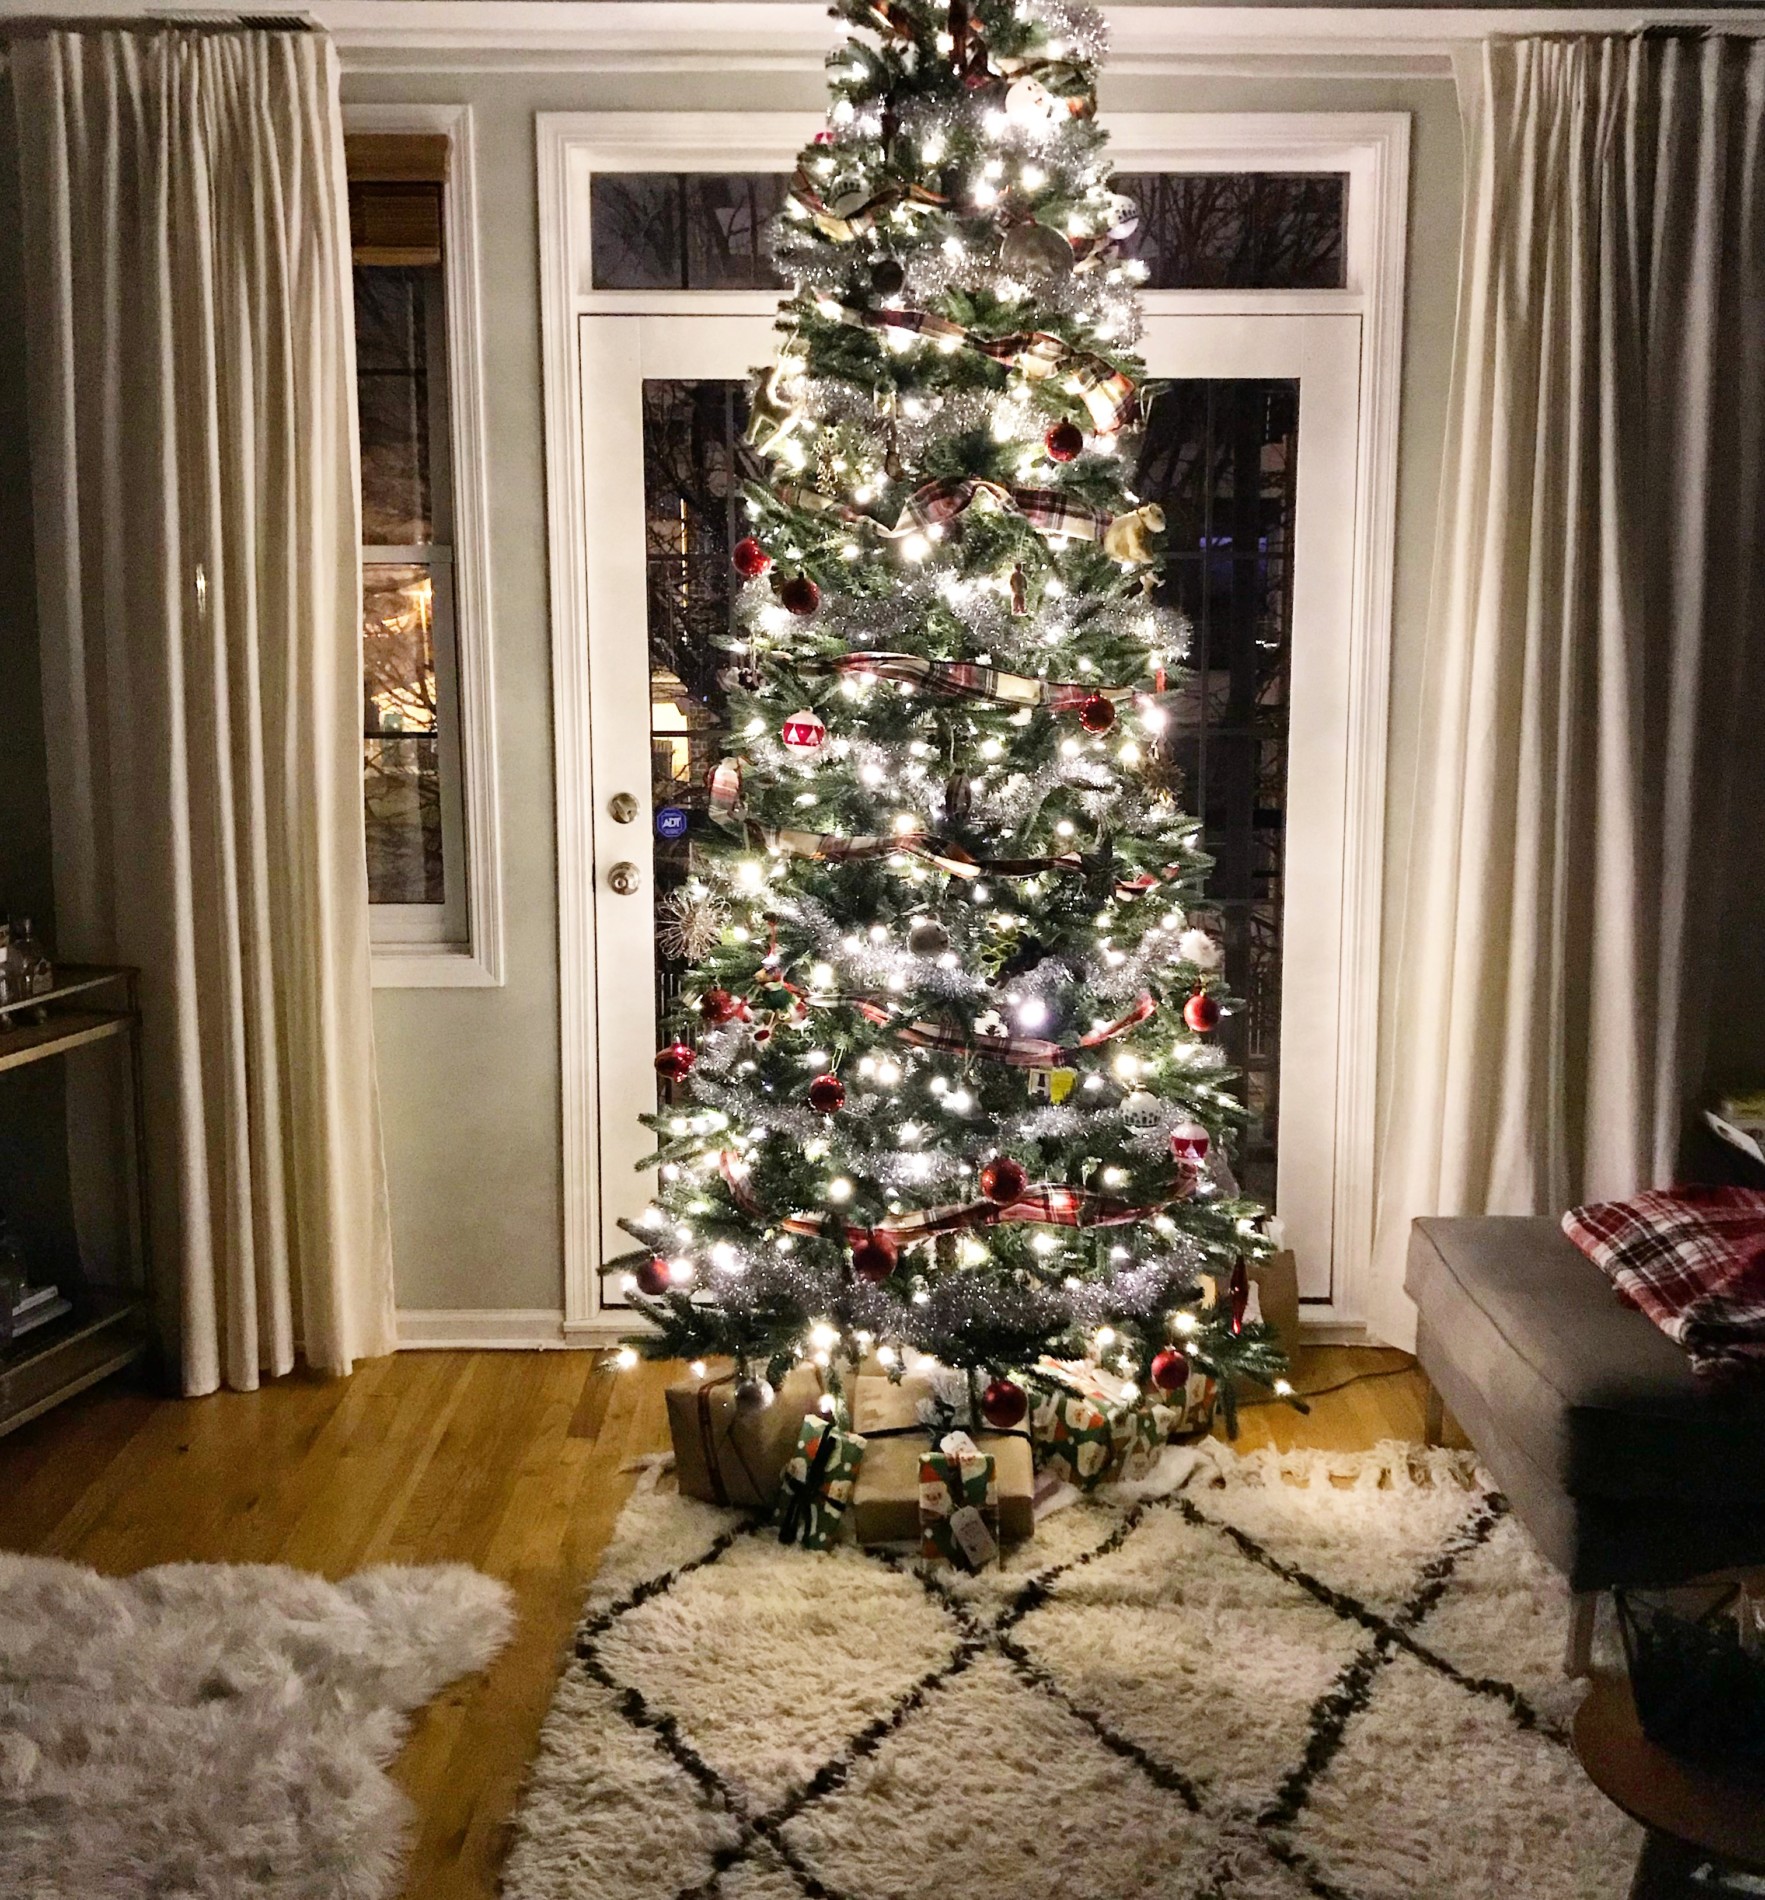 The Glow of My Christmas Tree